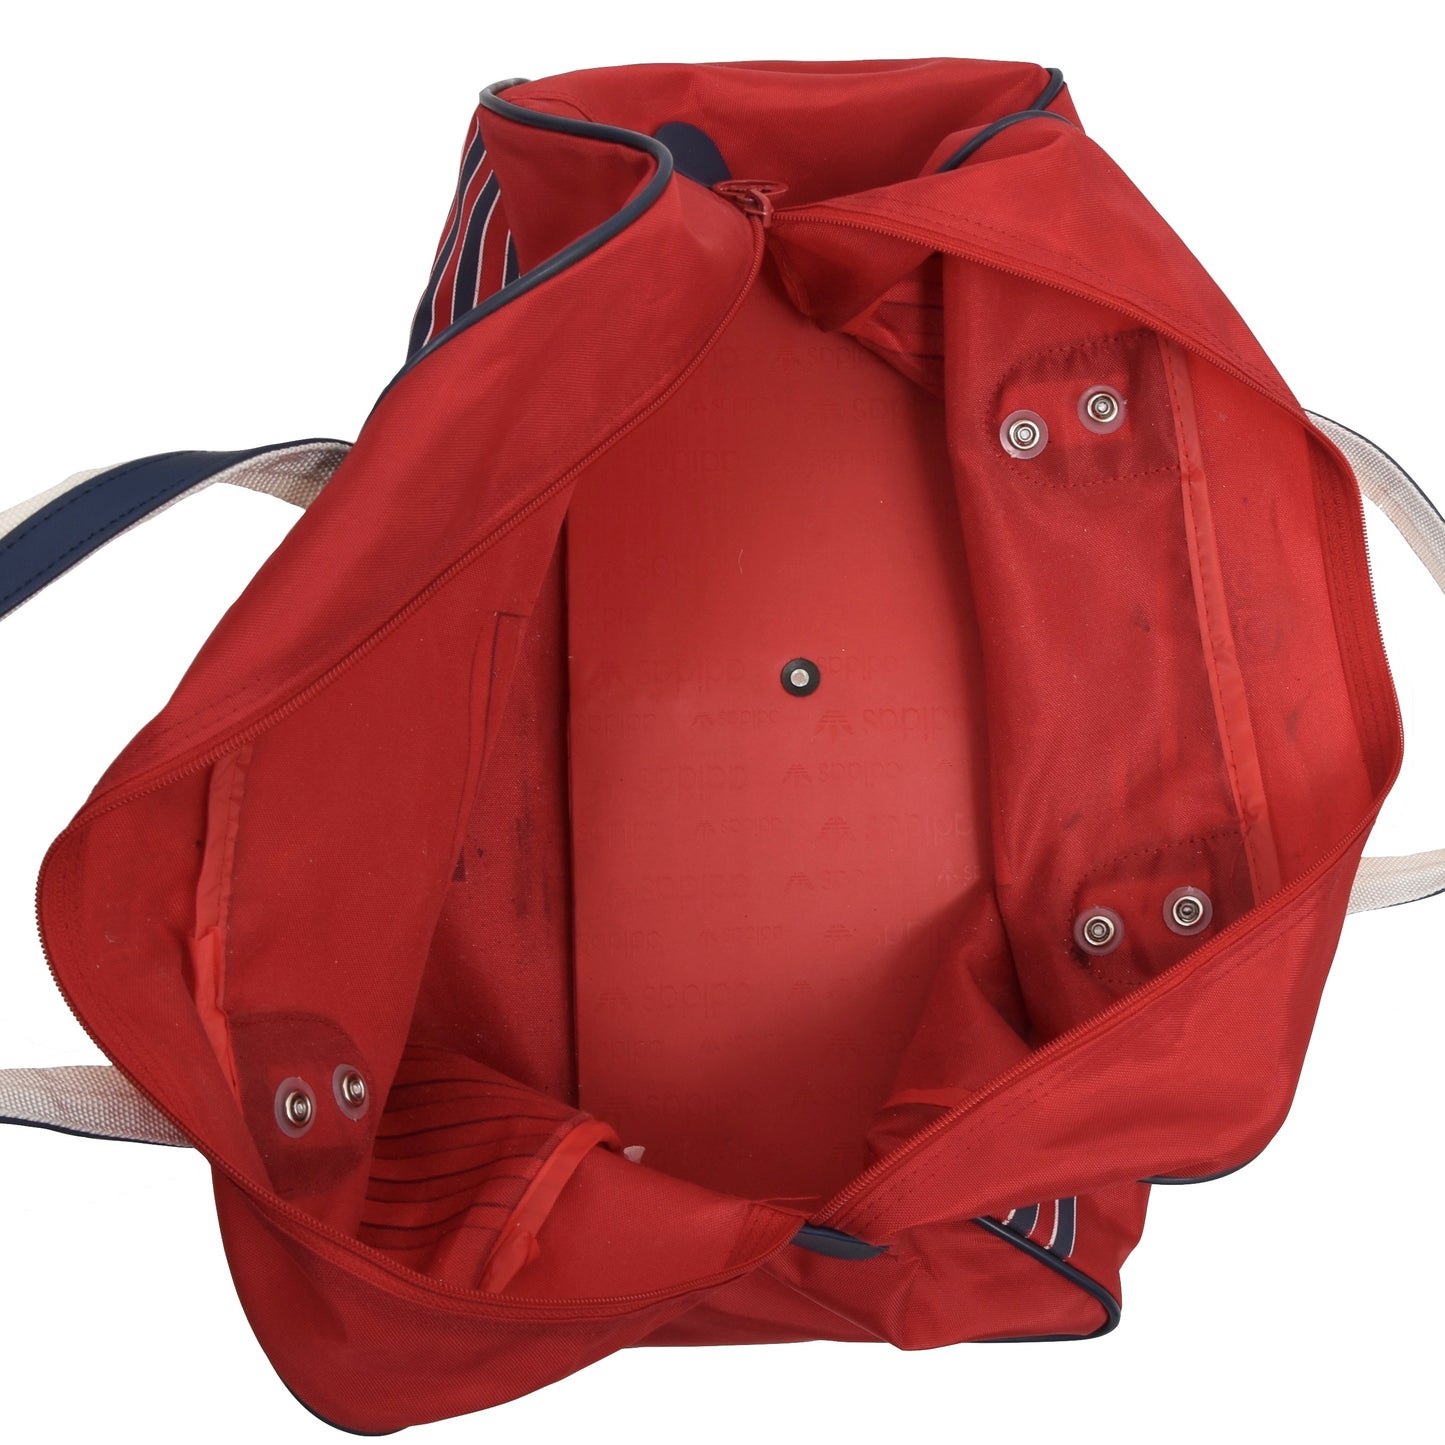 Vintage Adidas Nylon Gym Bag - Red